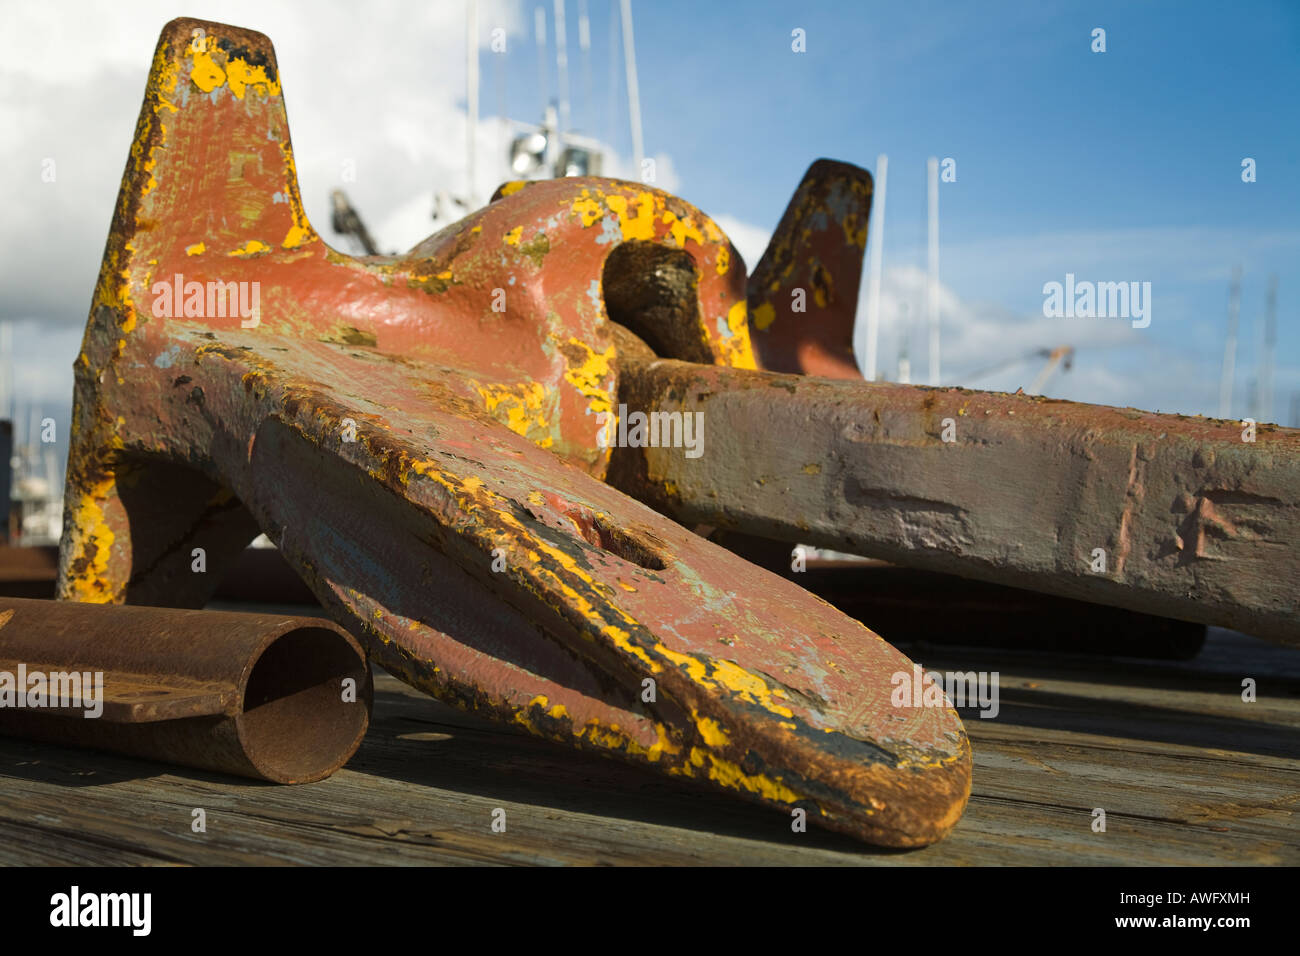 CALIFORNIA Santa Barbara Grand rusty metal boat anchor sur camion a disparu et la peinture jaune écaillée Banque D'Images